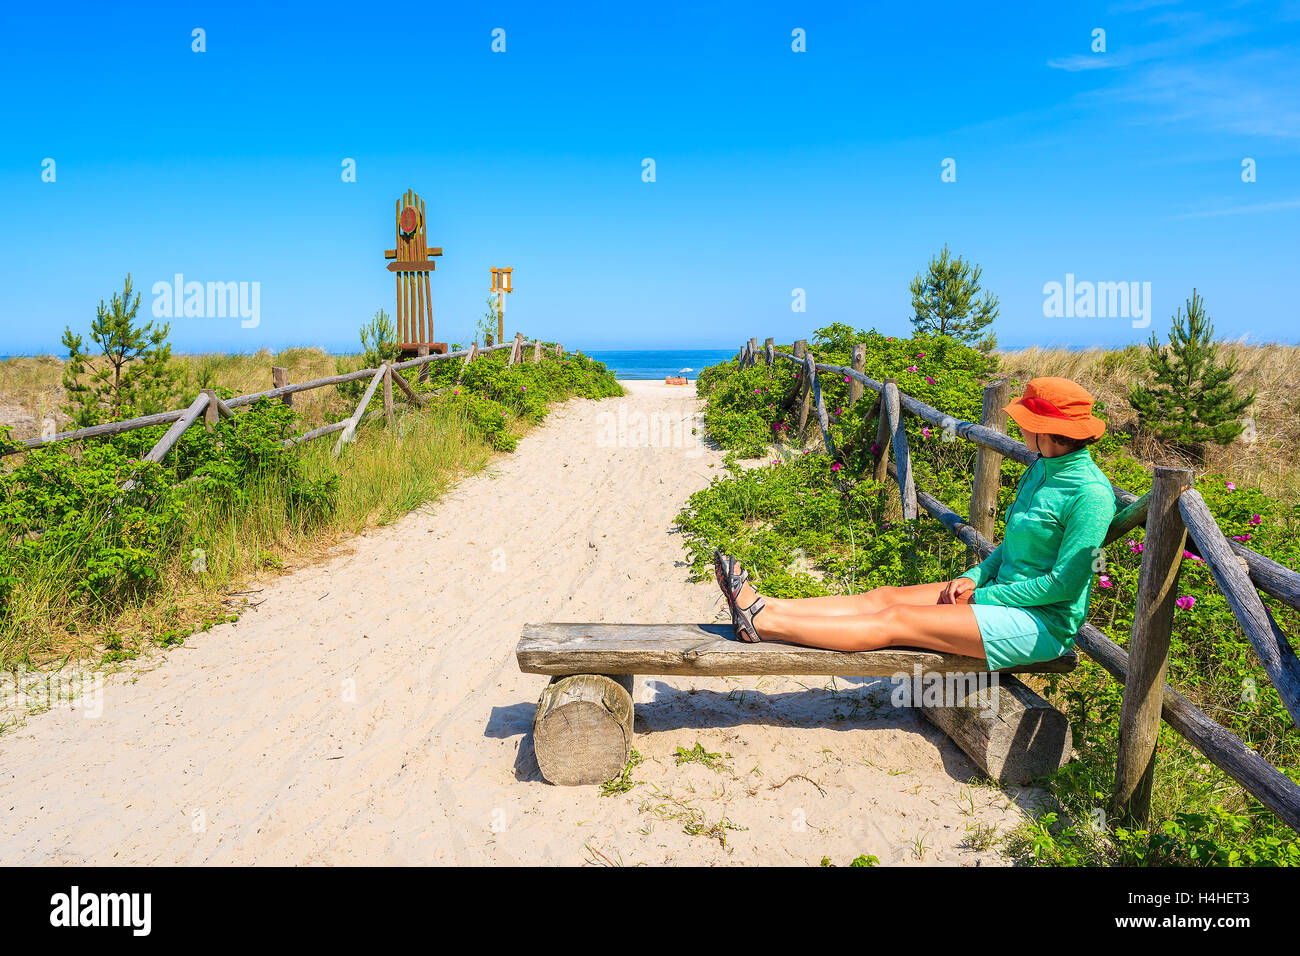 Young woman tourist sitting on bench at entrance to beautiful sandy beach in Lubiatowo coastal village, Baltic Sea, Poland Stock Photo